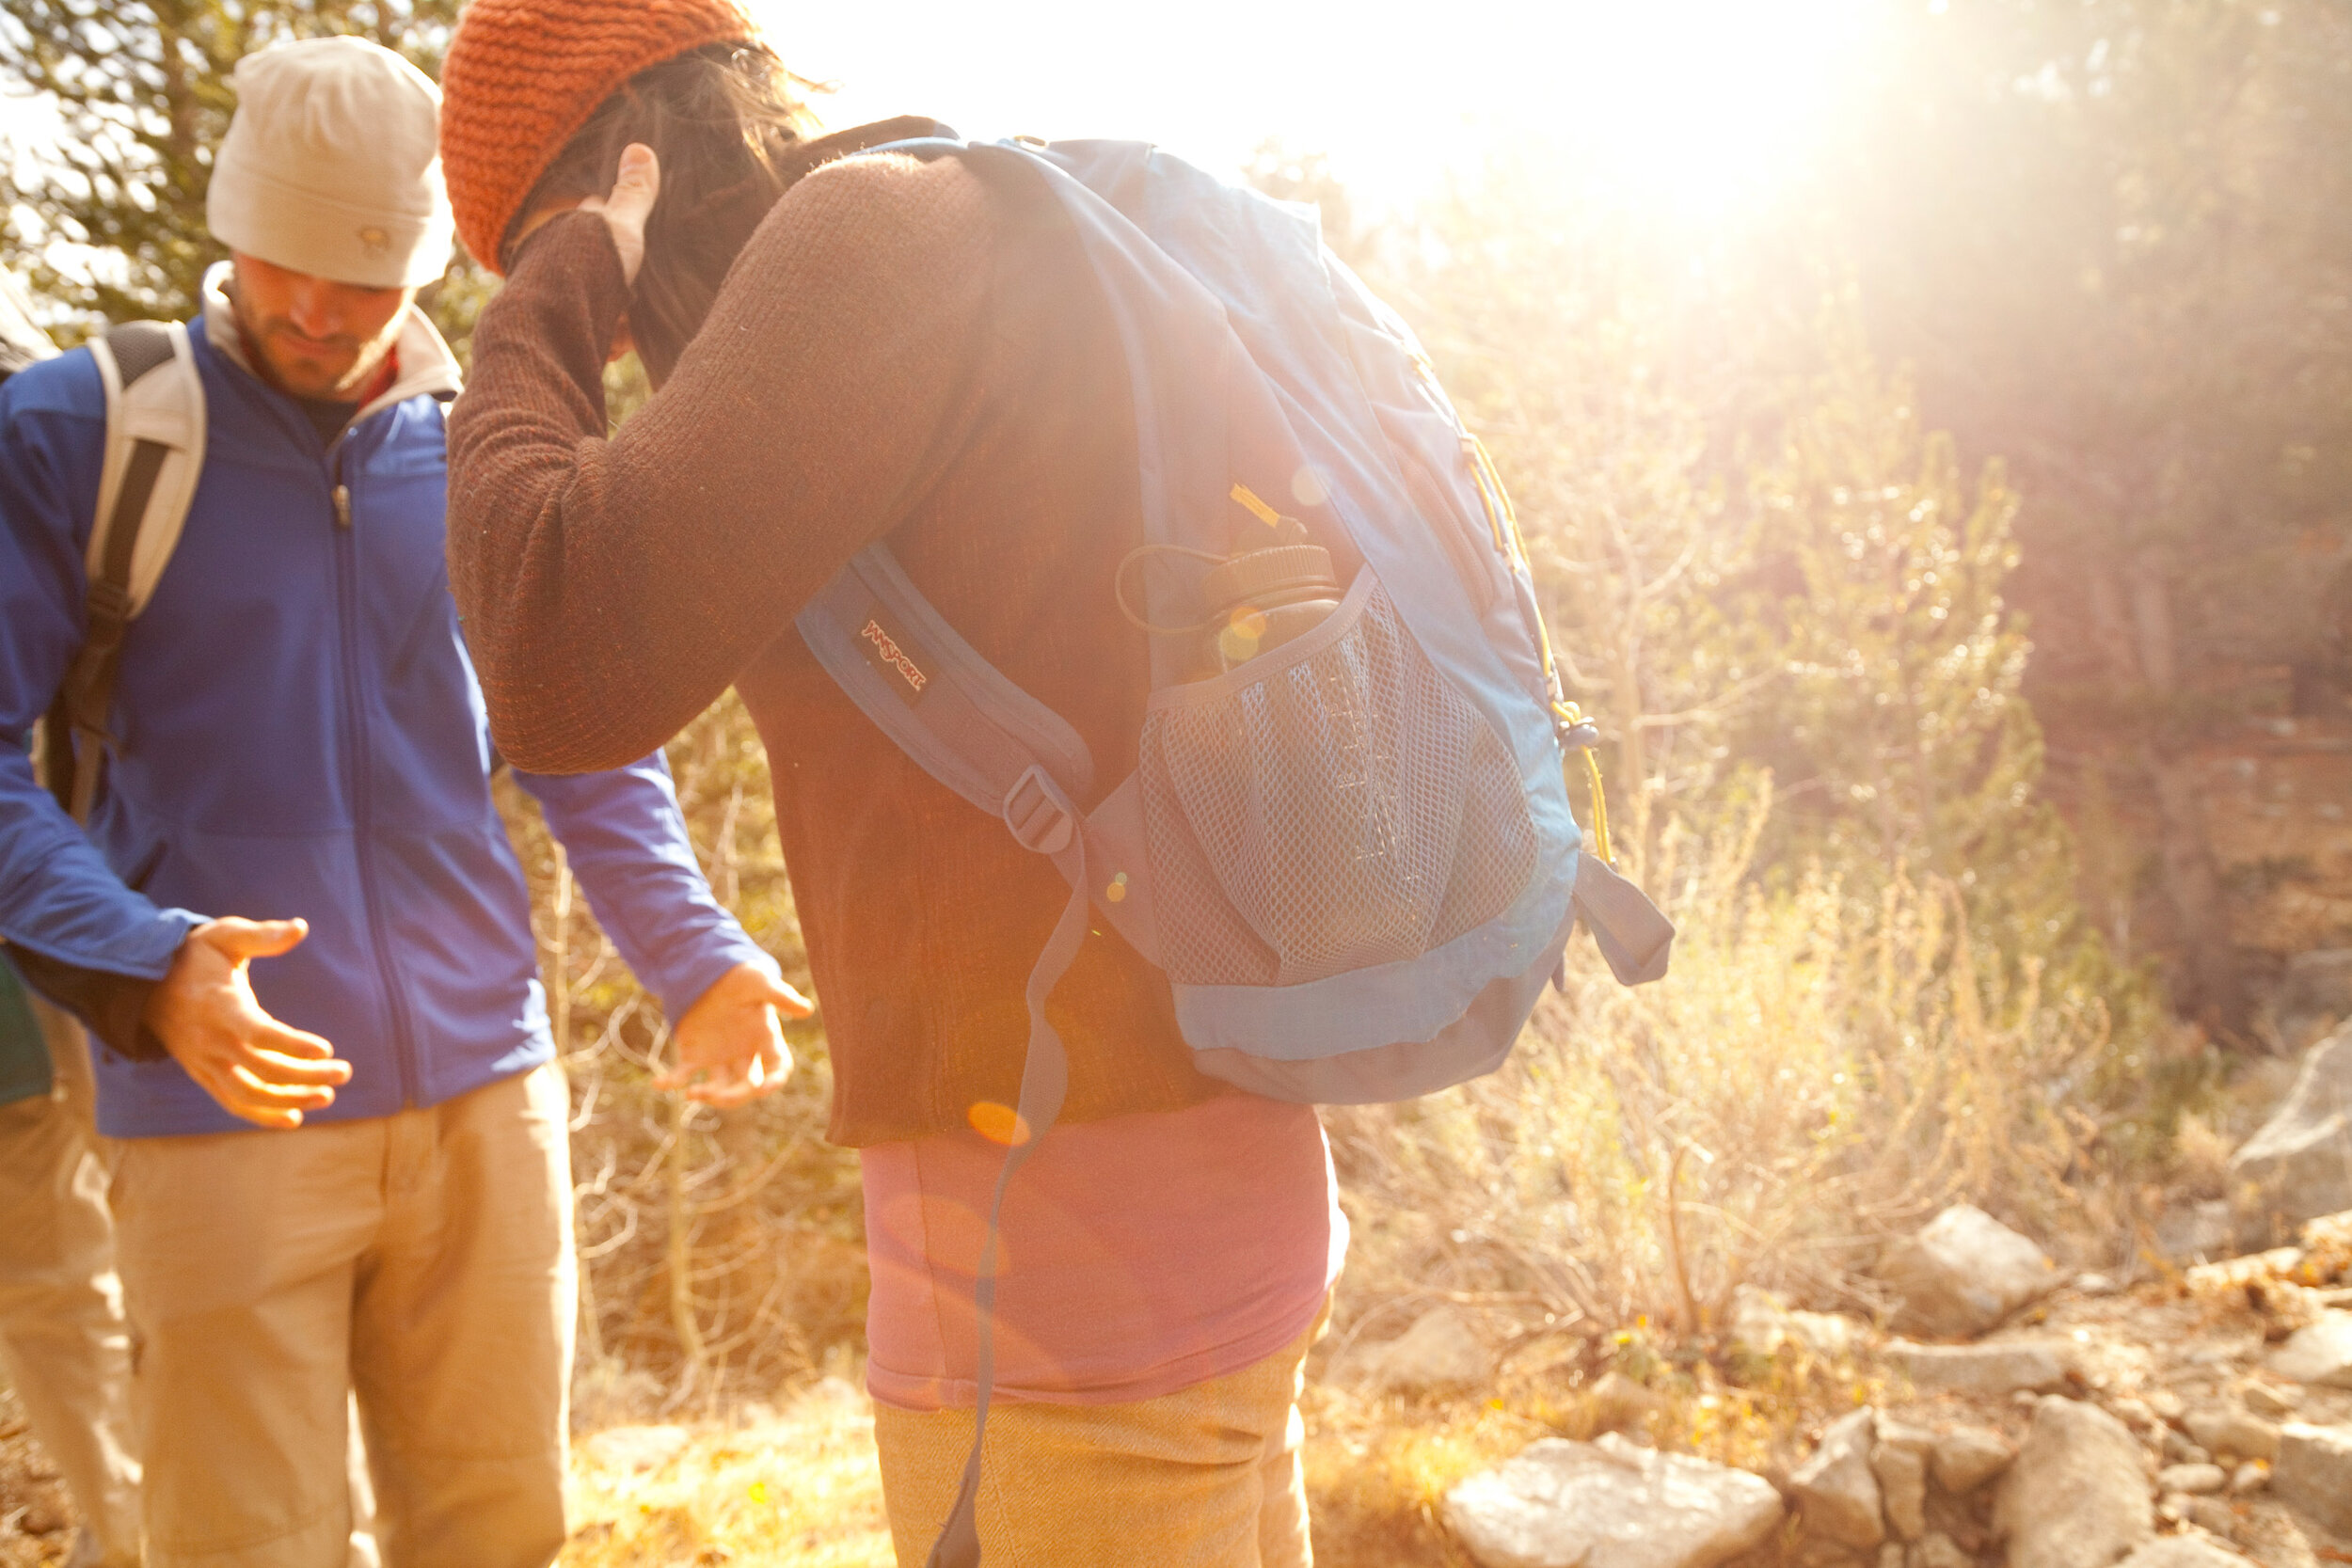  Adventure: Three friends on a backpack trip in the Eastern Sierras, California 